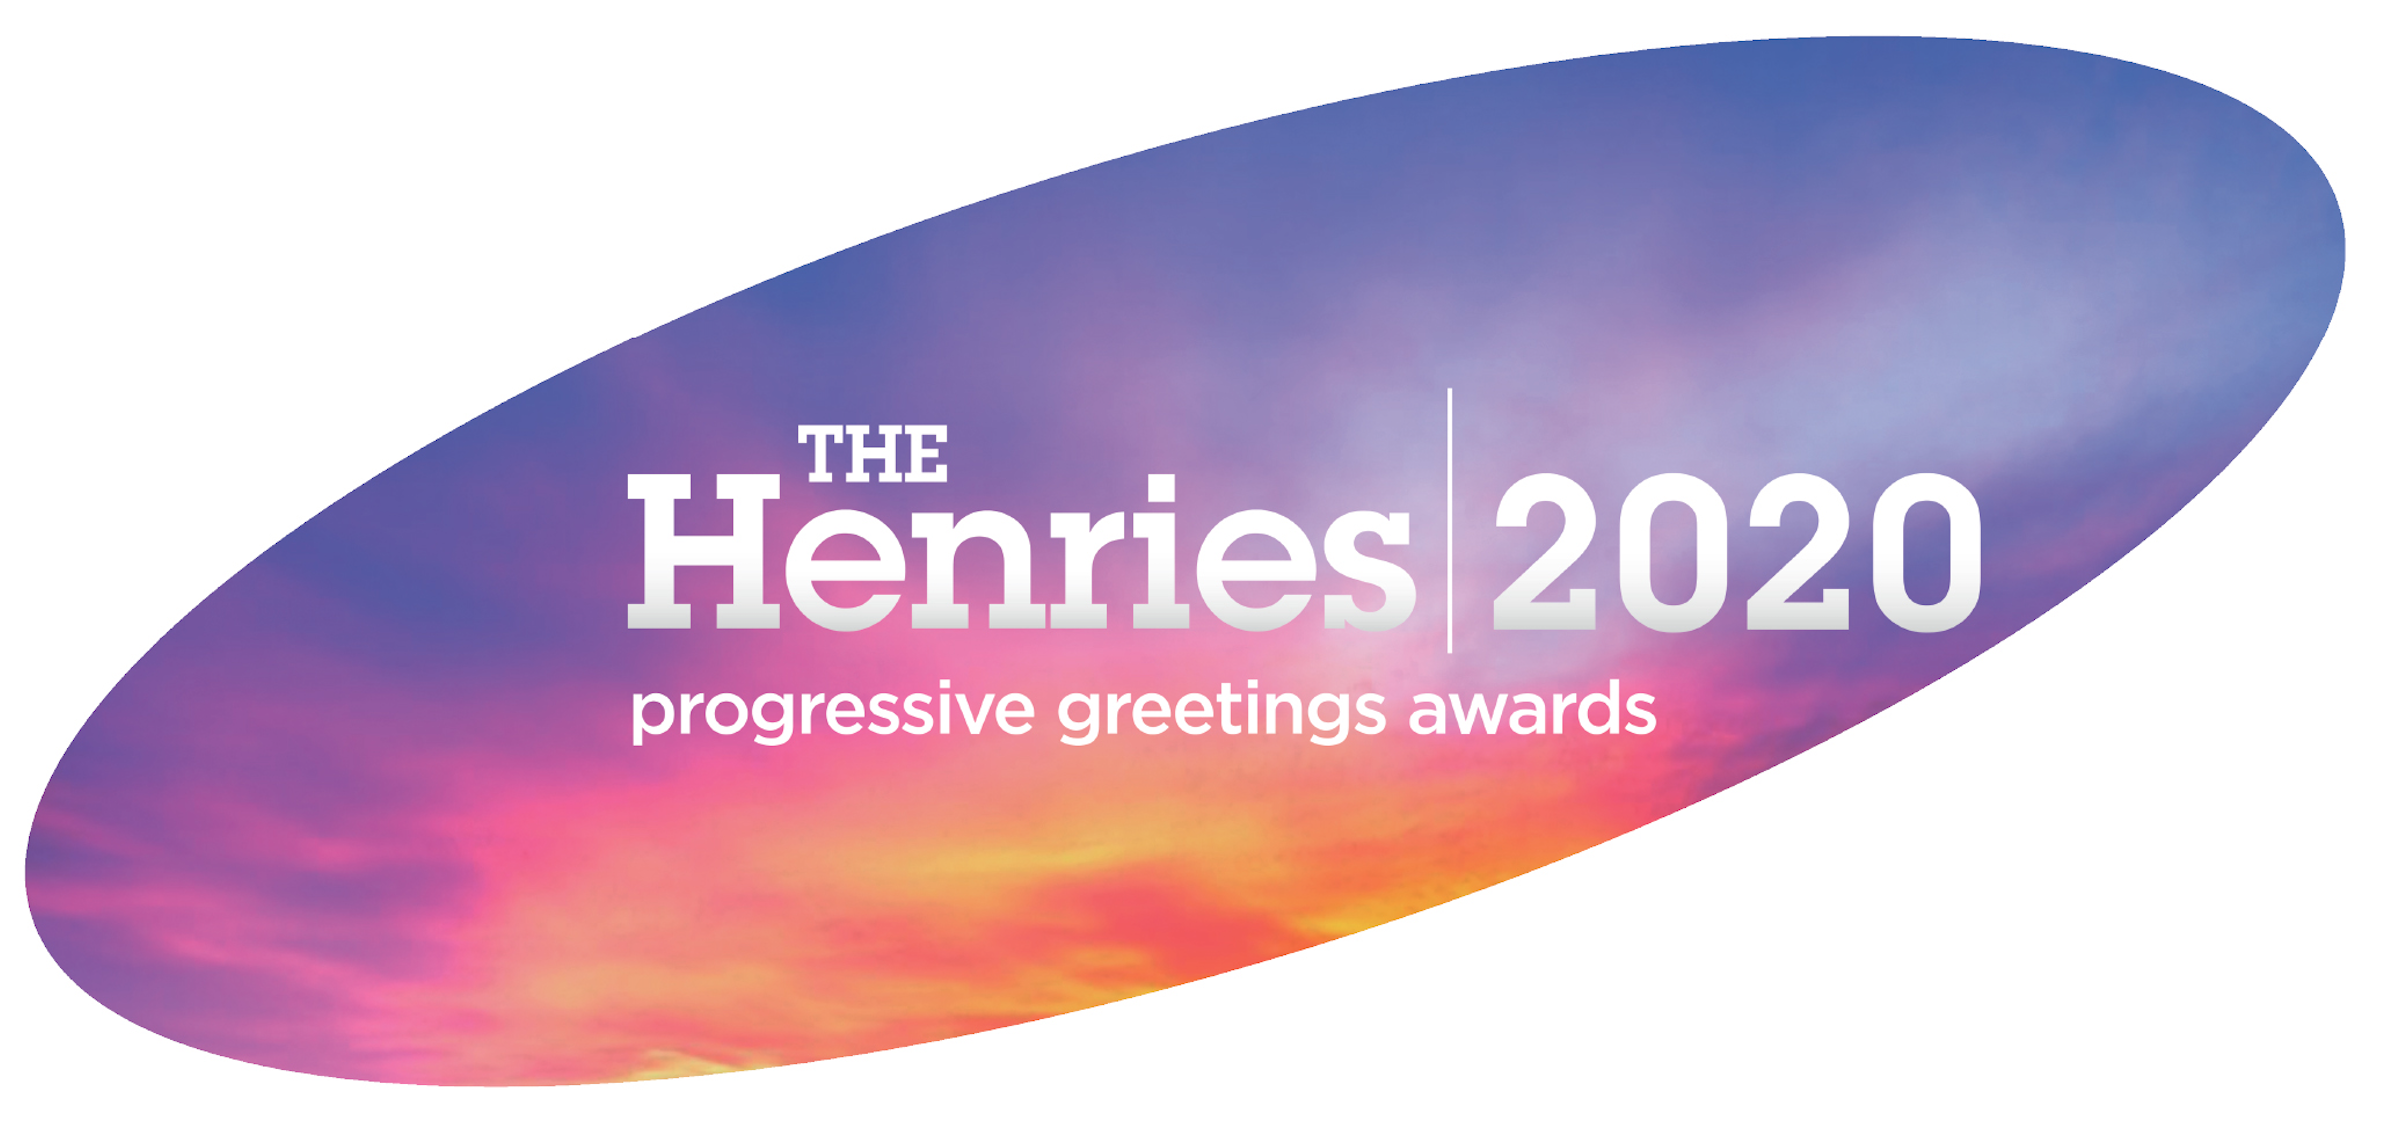 3B.. The Henries 2020 logo Screenshot 2020-06-02 at 11.51.11 copy 2 copy